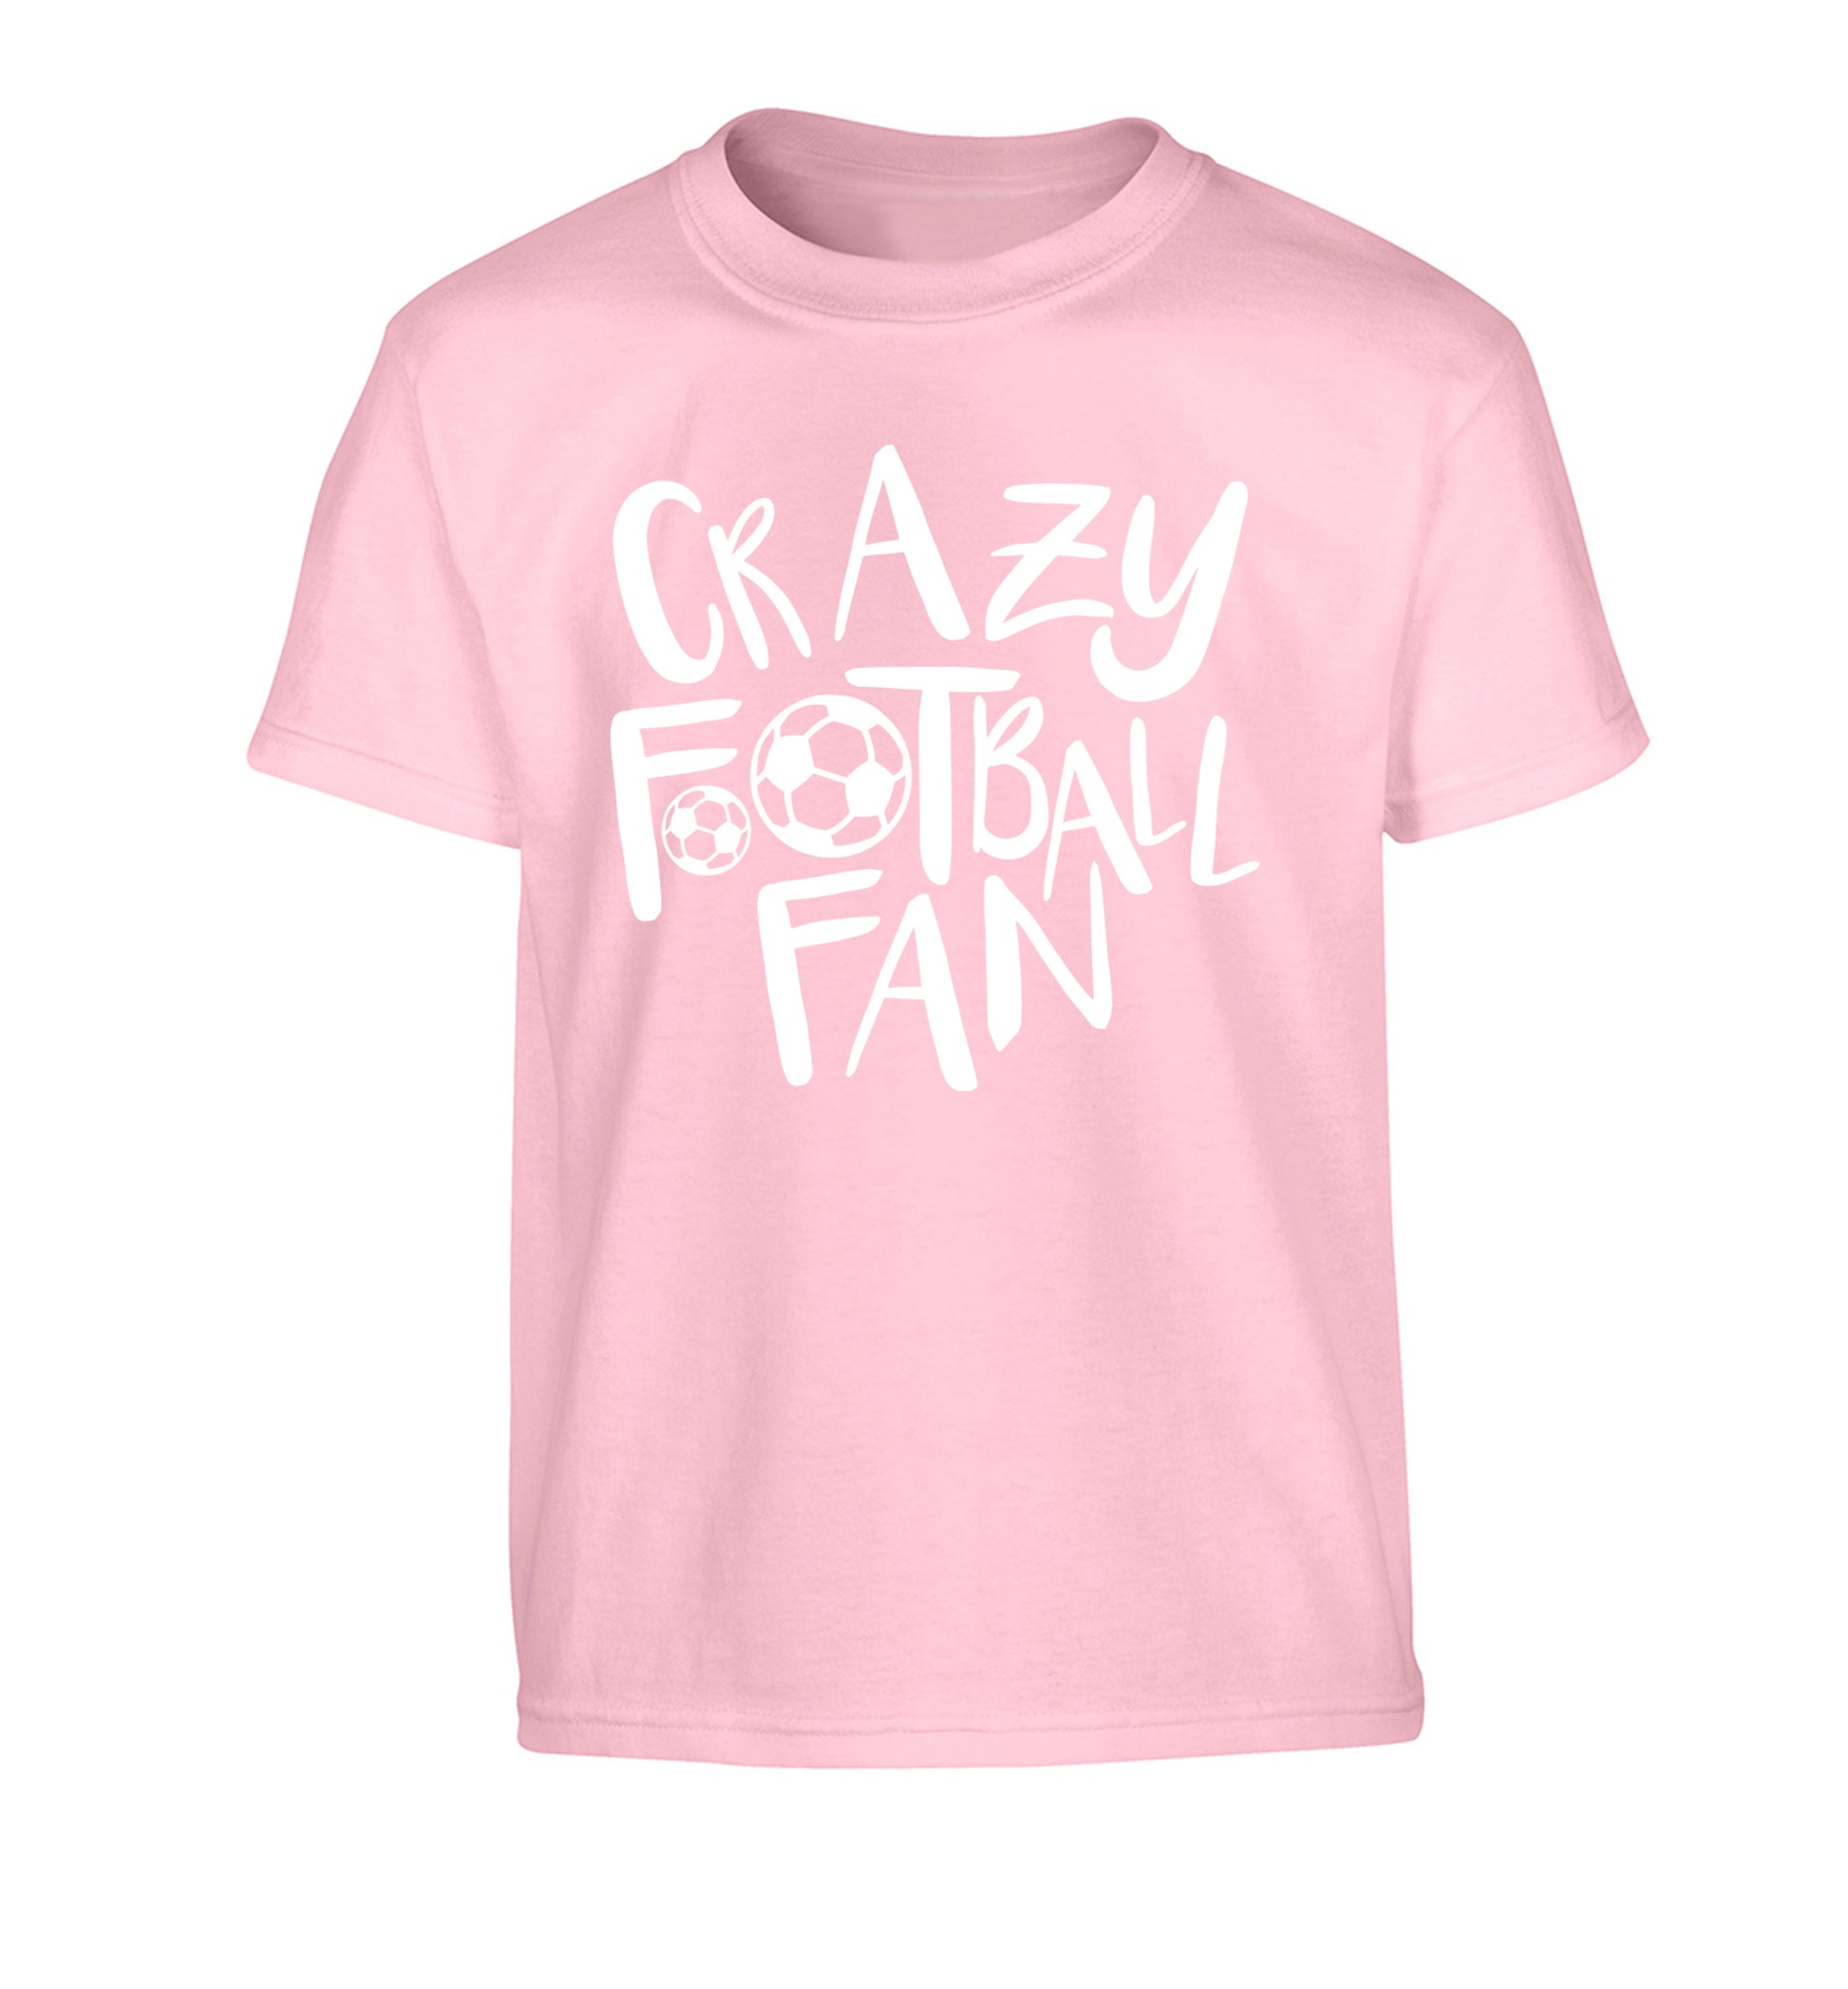 Crazy football fan Children's light pink Tshirt 12-14 Years